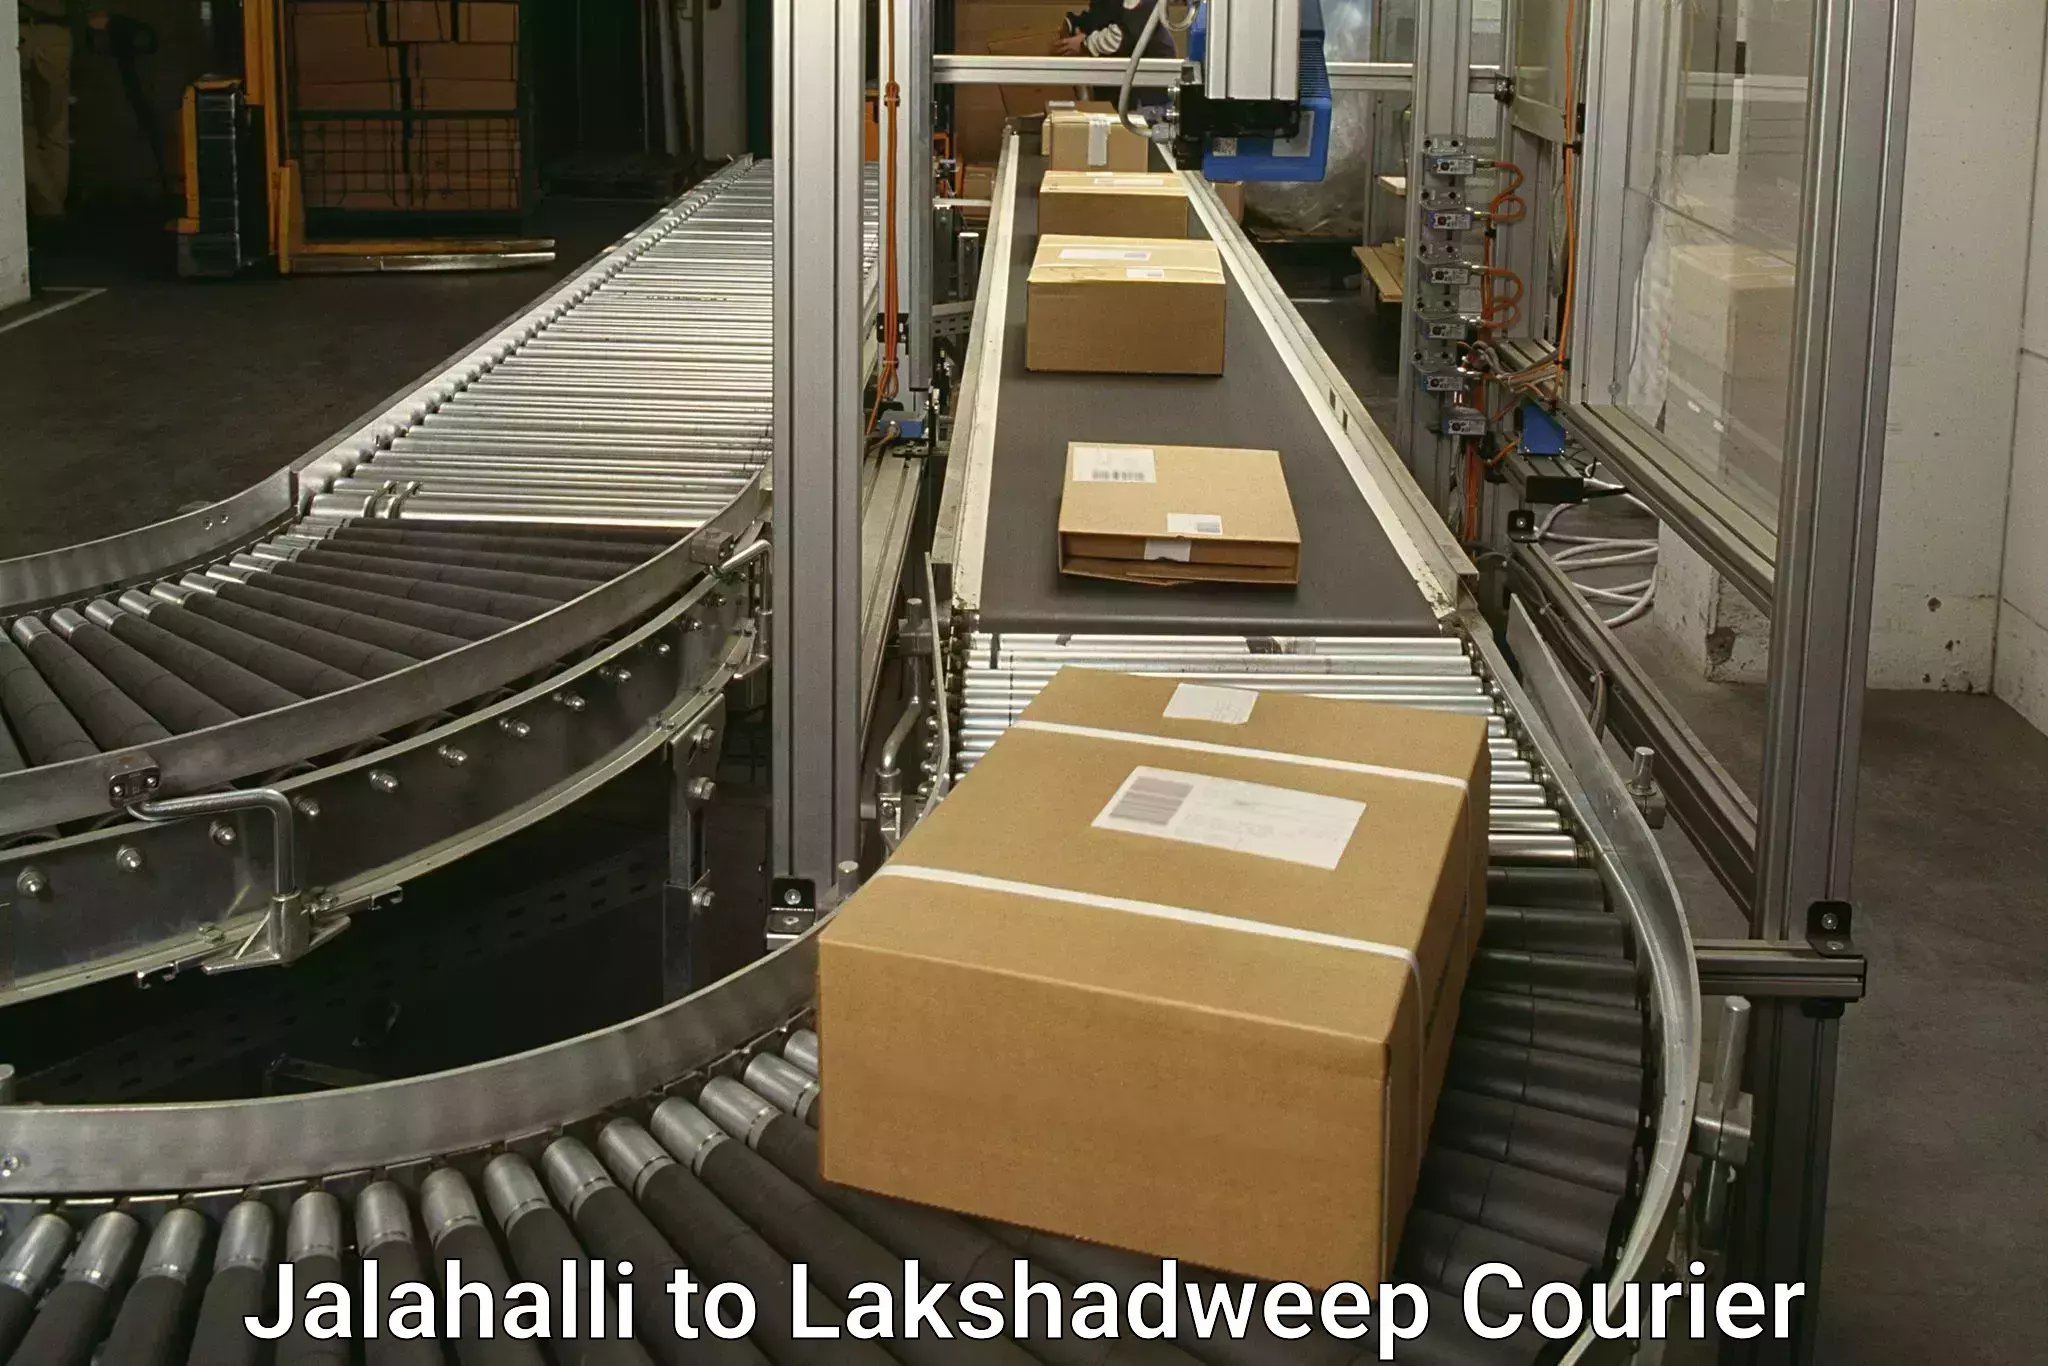 Modern courier technology Jalahalli to Lakshadweep